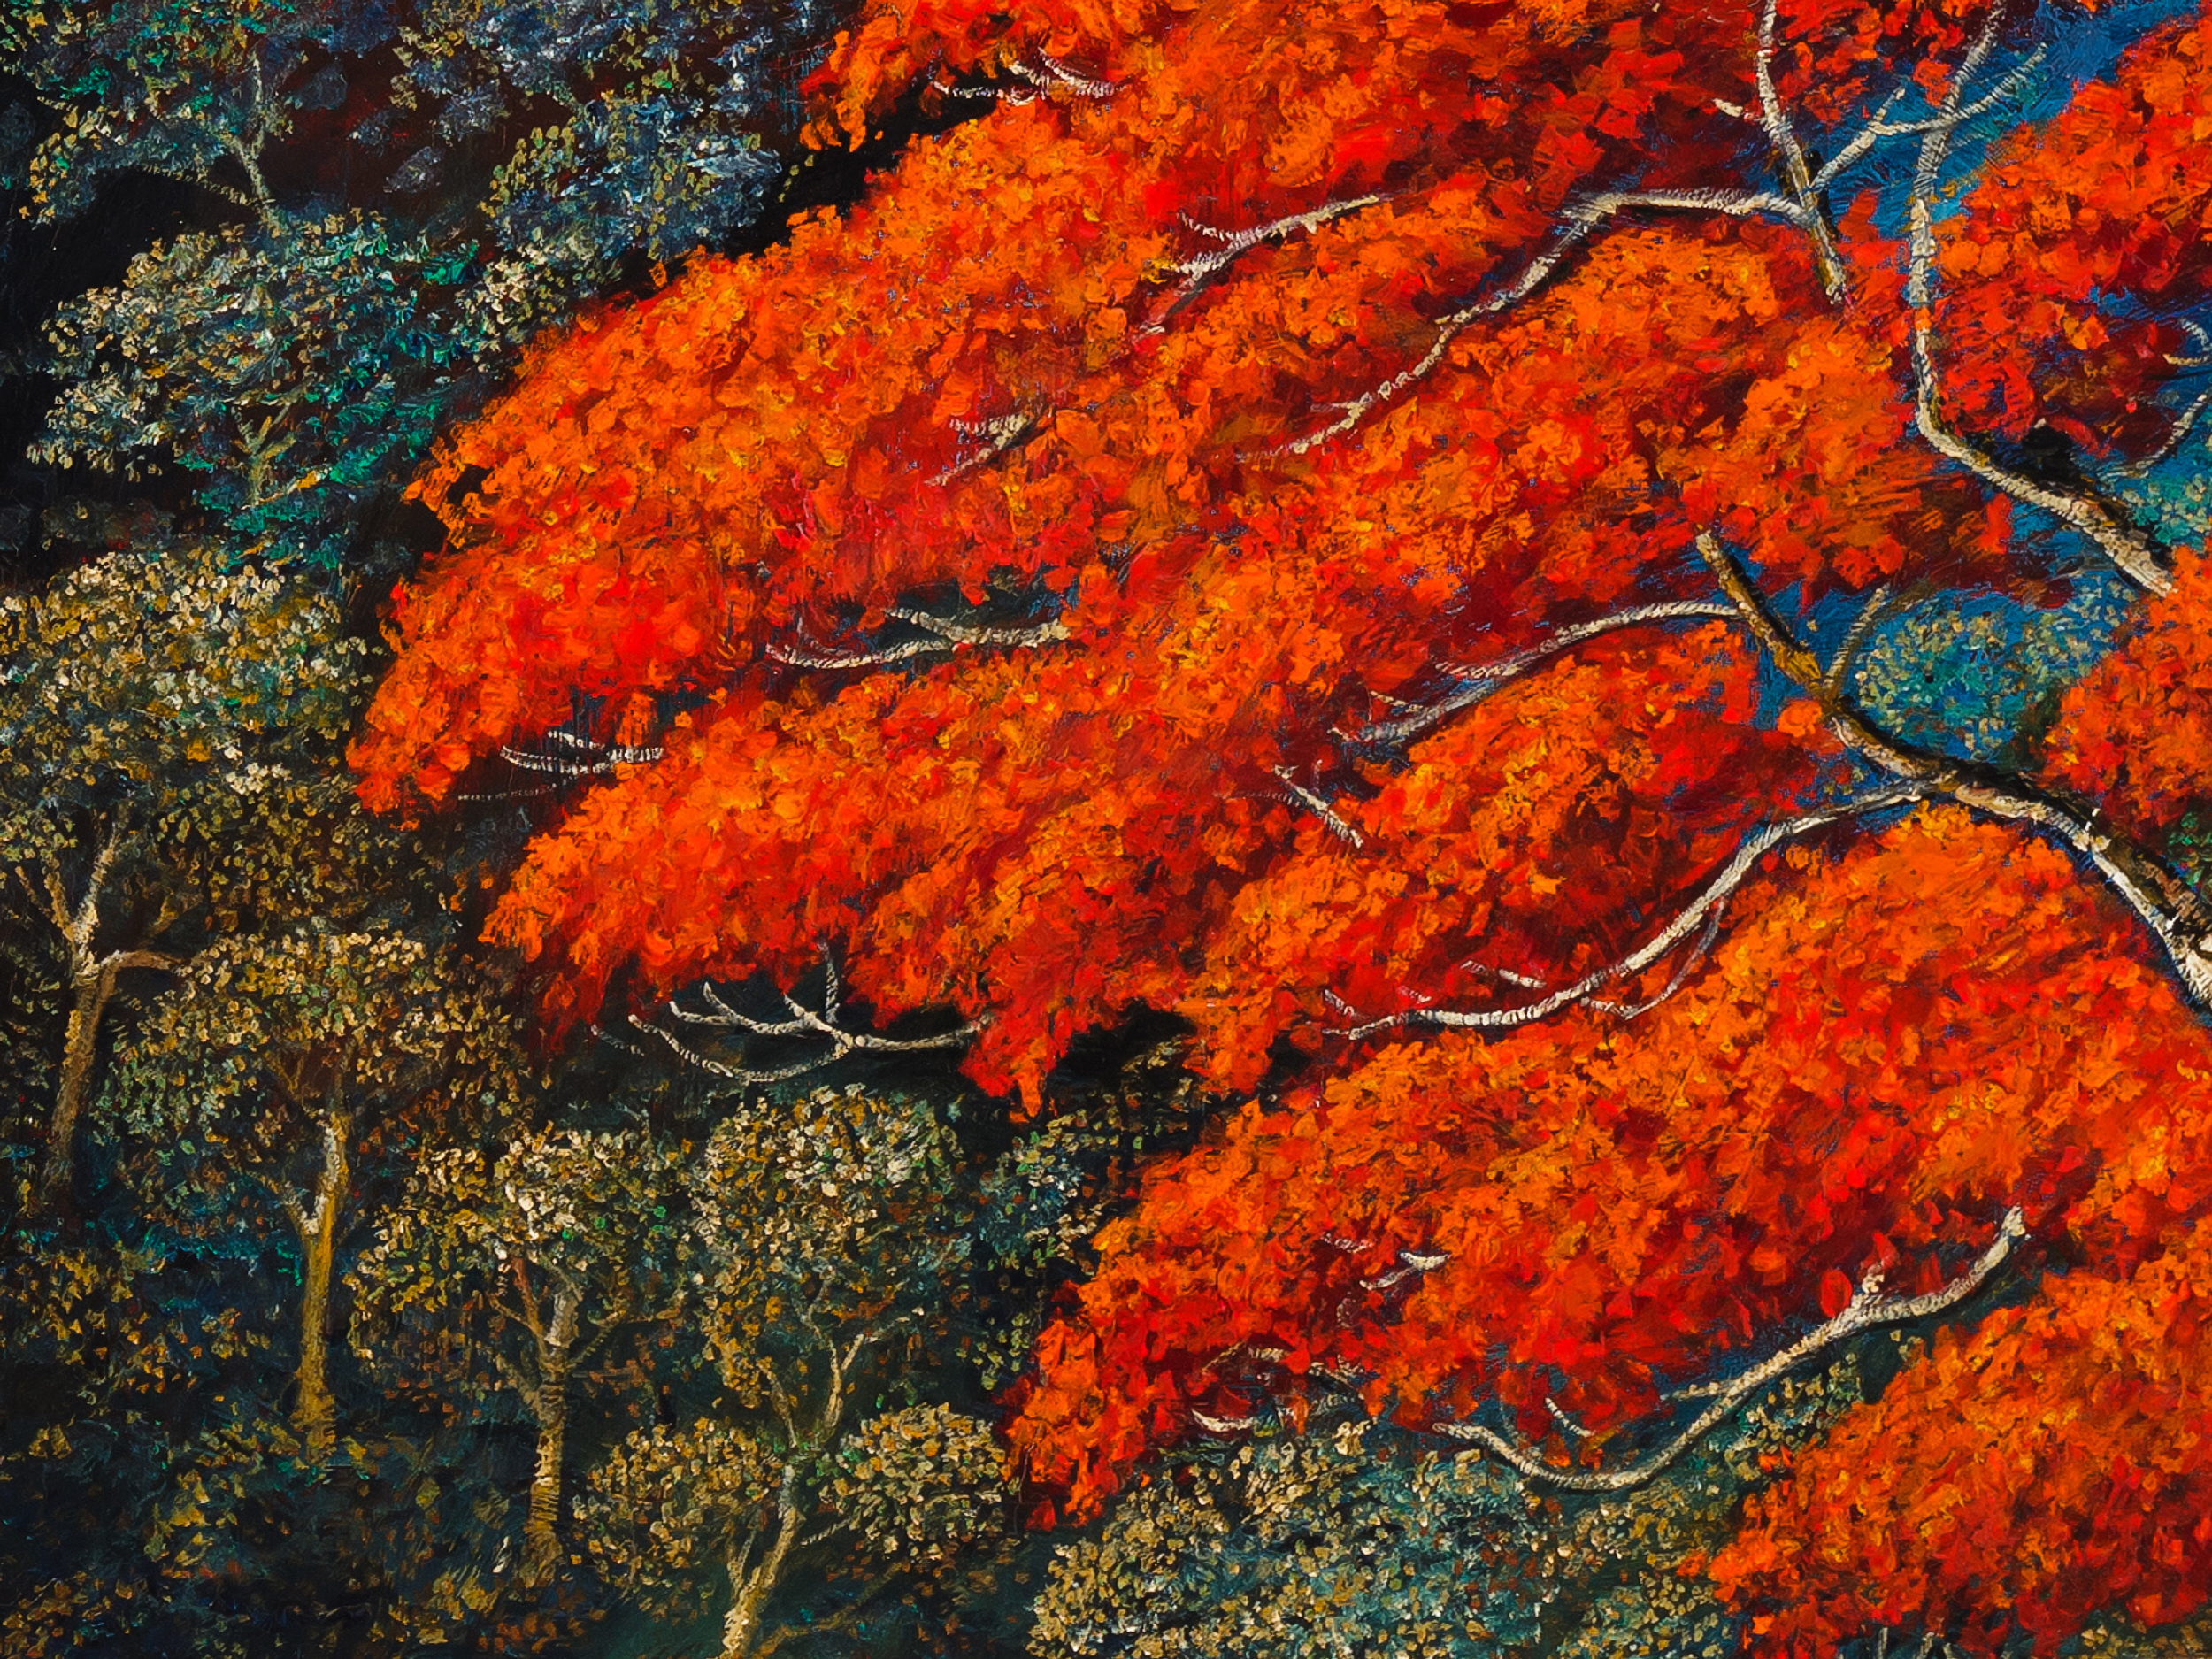   Pohon Flamboyan,  1991 oil on canvas, detail   H.Widayat   client:  Cedric Edwin Pinto    